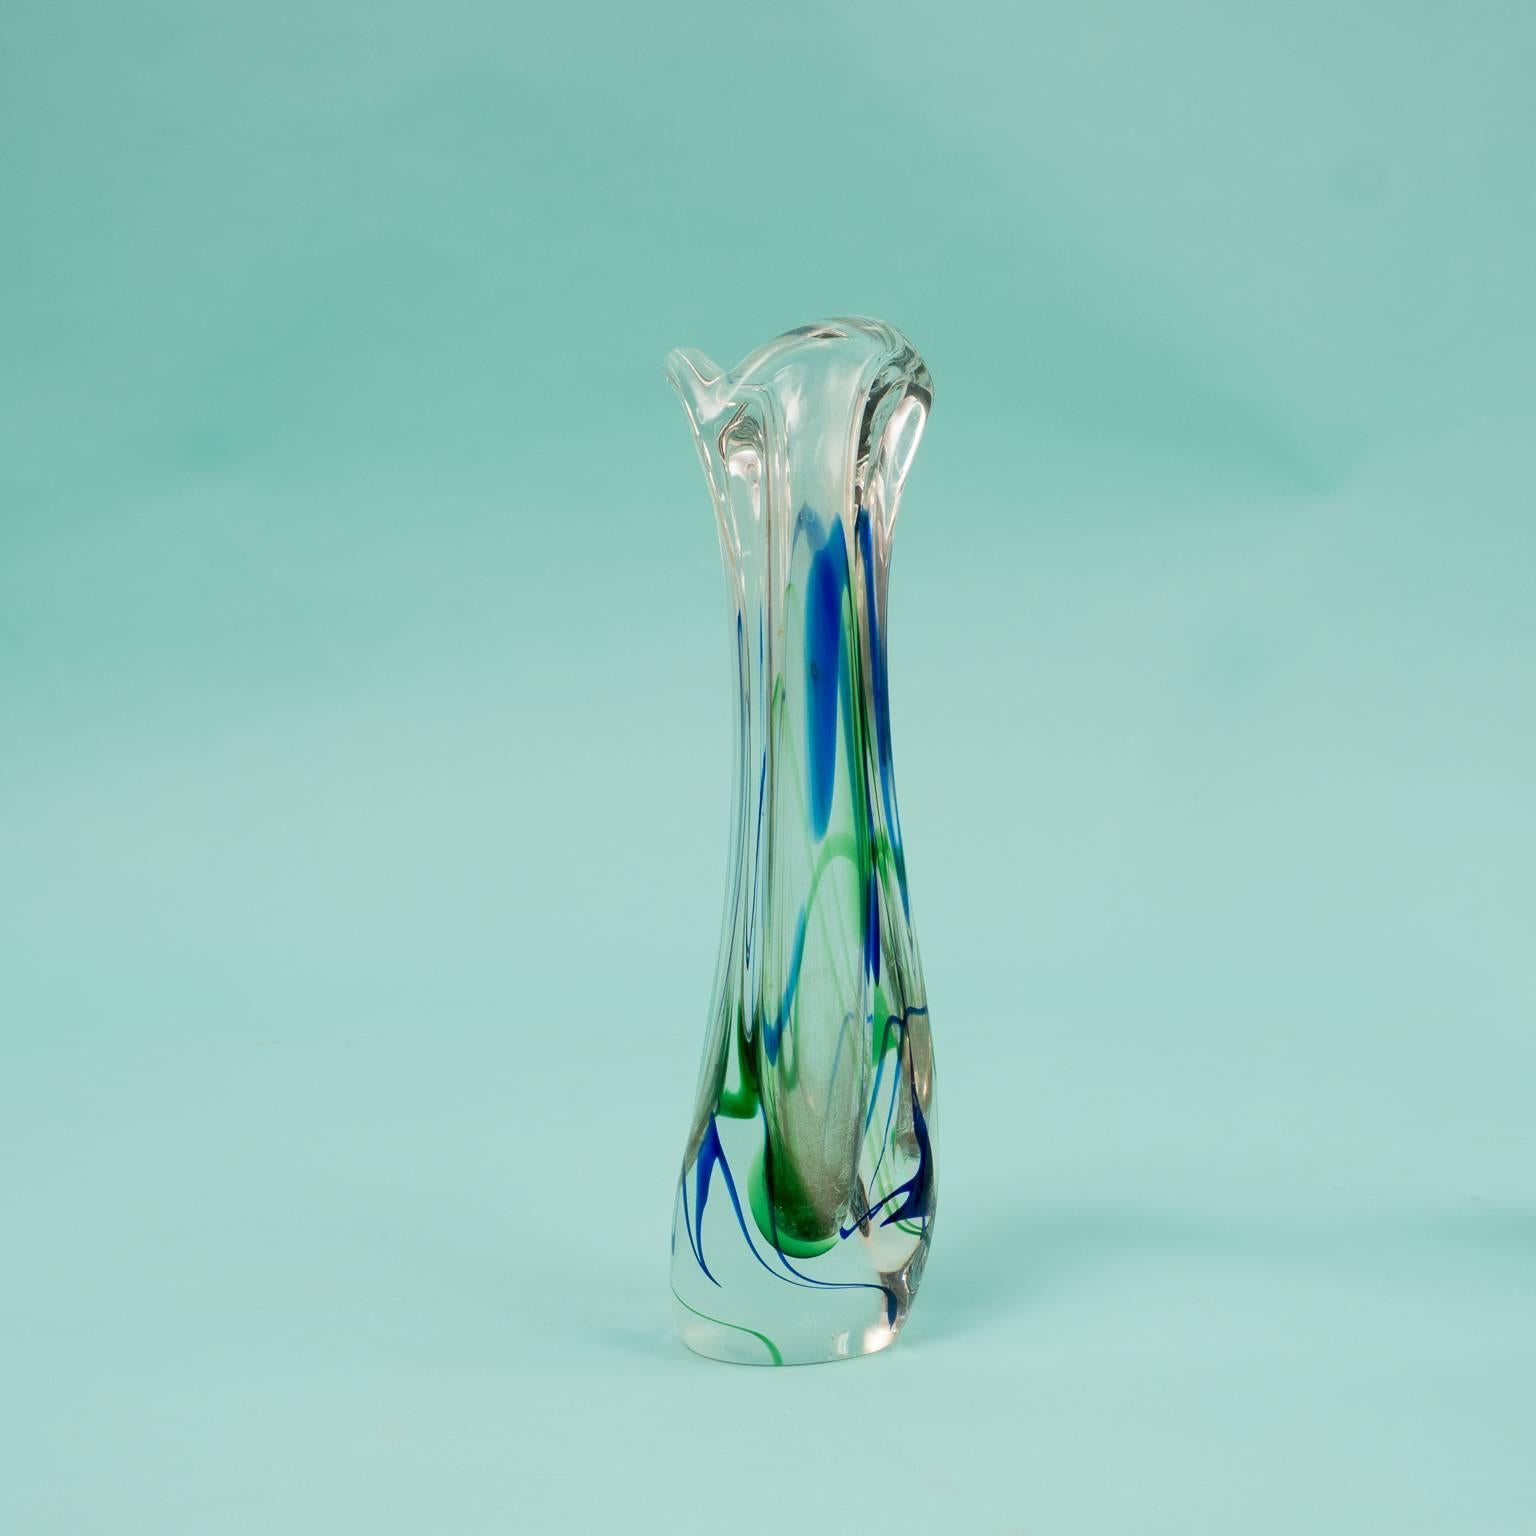 Dutch Bicolored 1960s Glass Vase by Kristalunie Maastricht For Sale